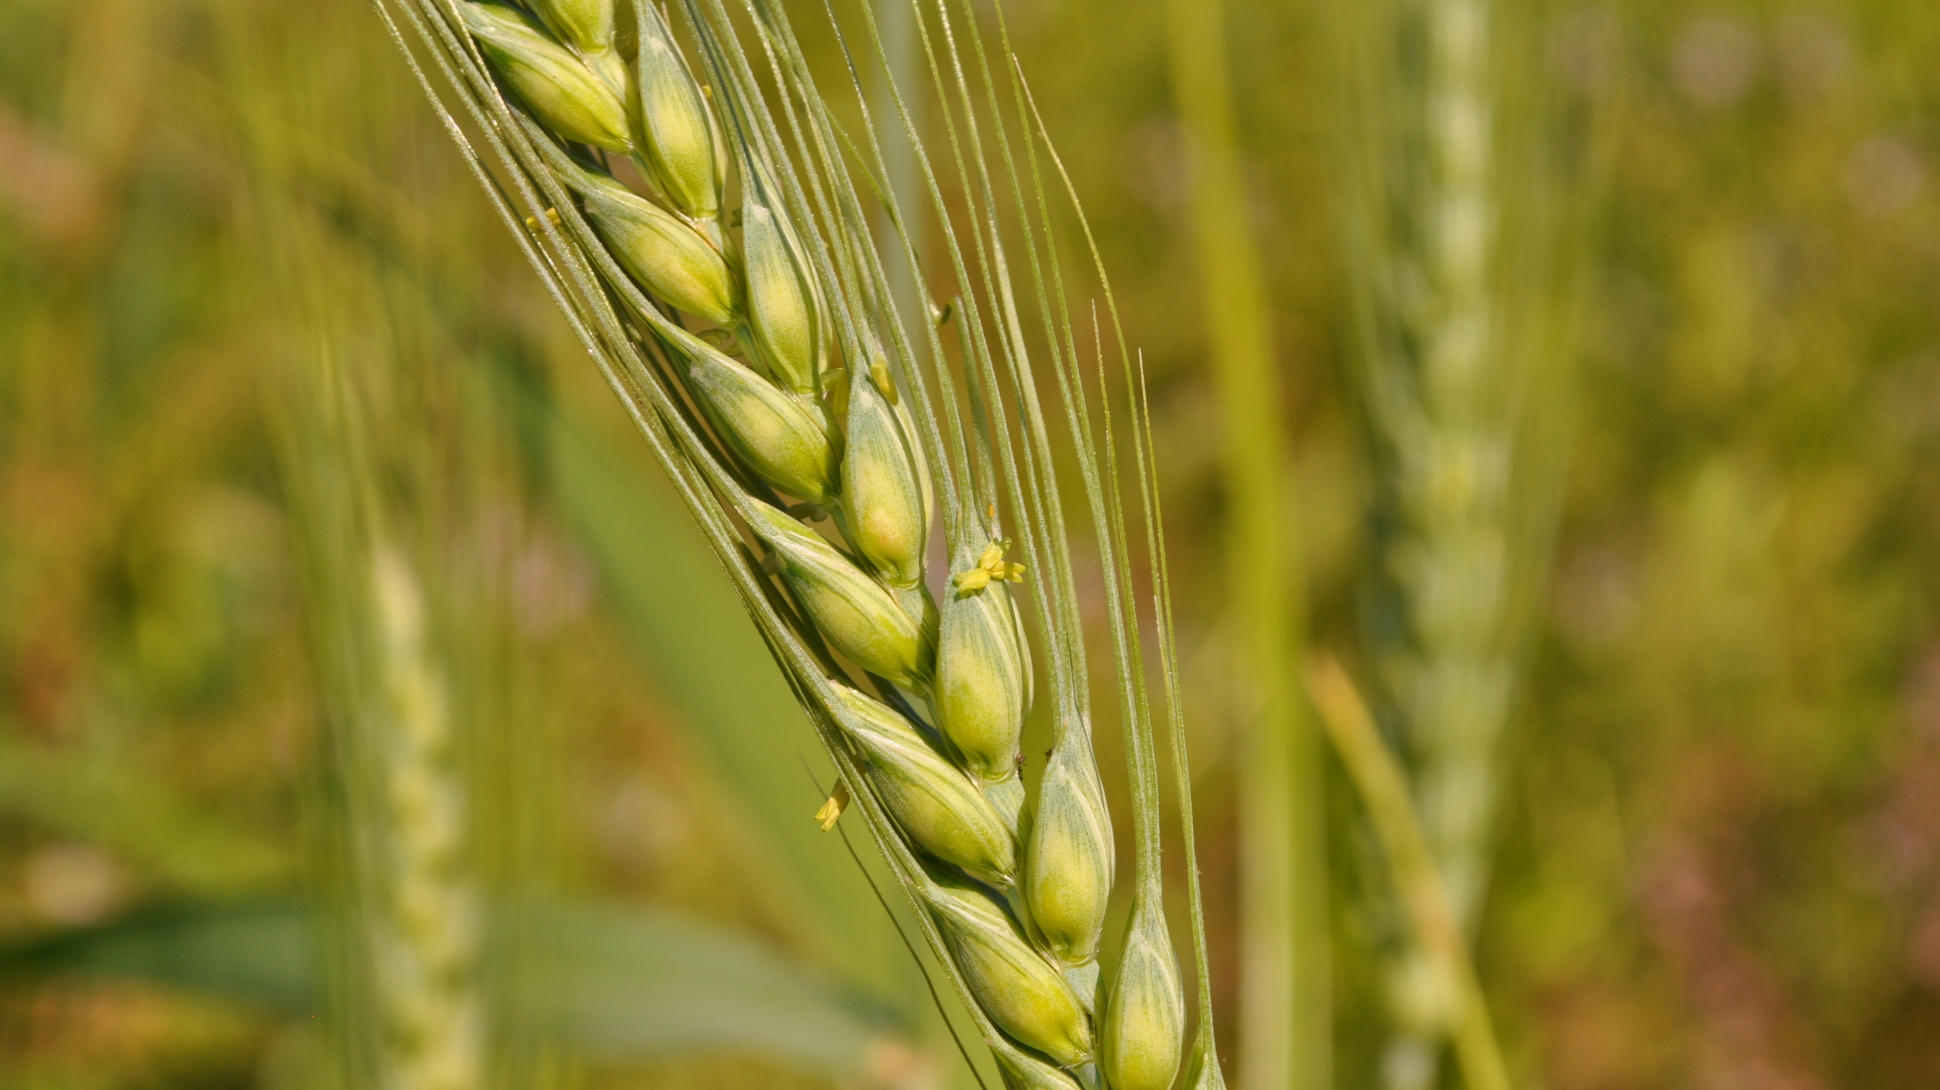 A green brown ear of wheat in a field